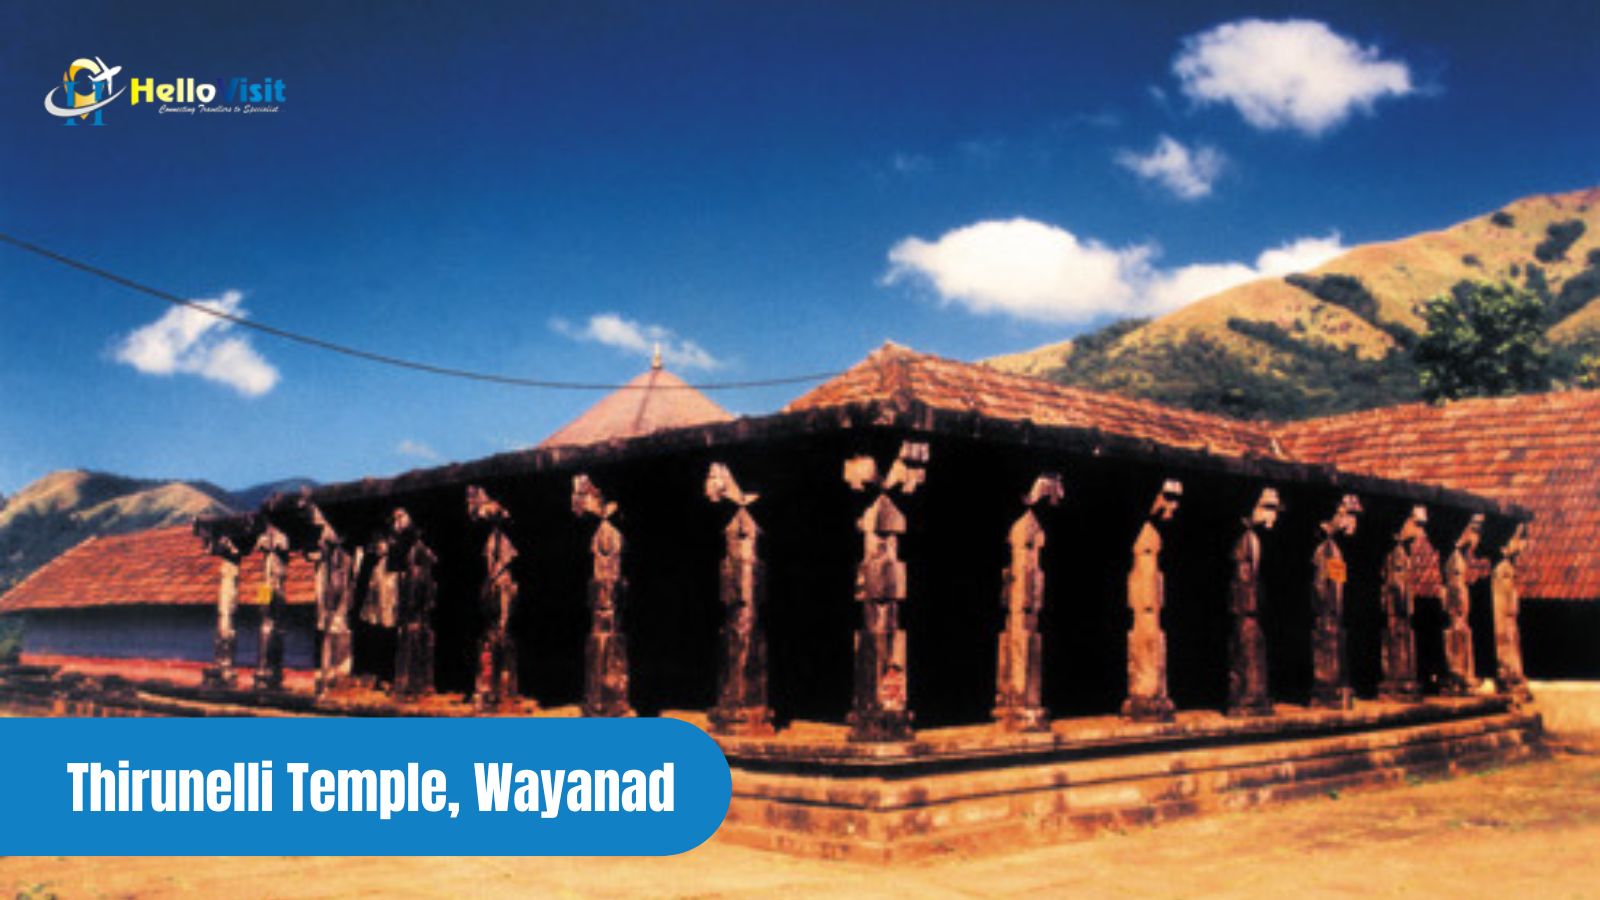 Thirunelli Temple, Wayanad 